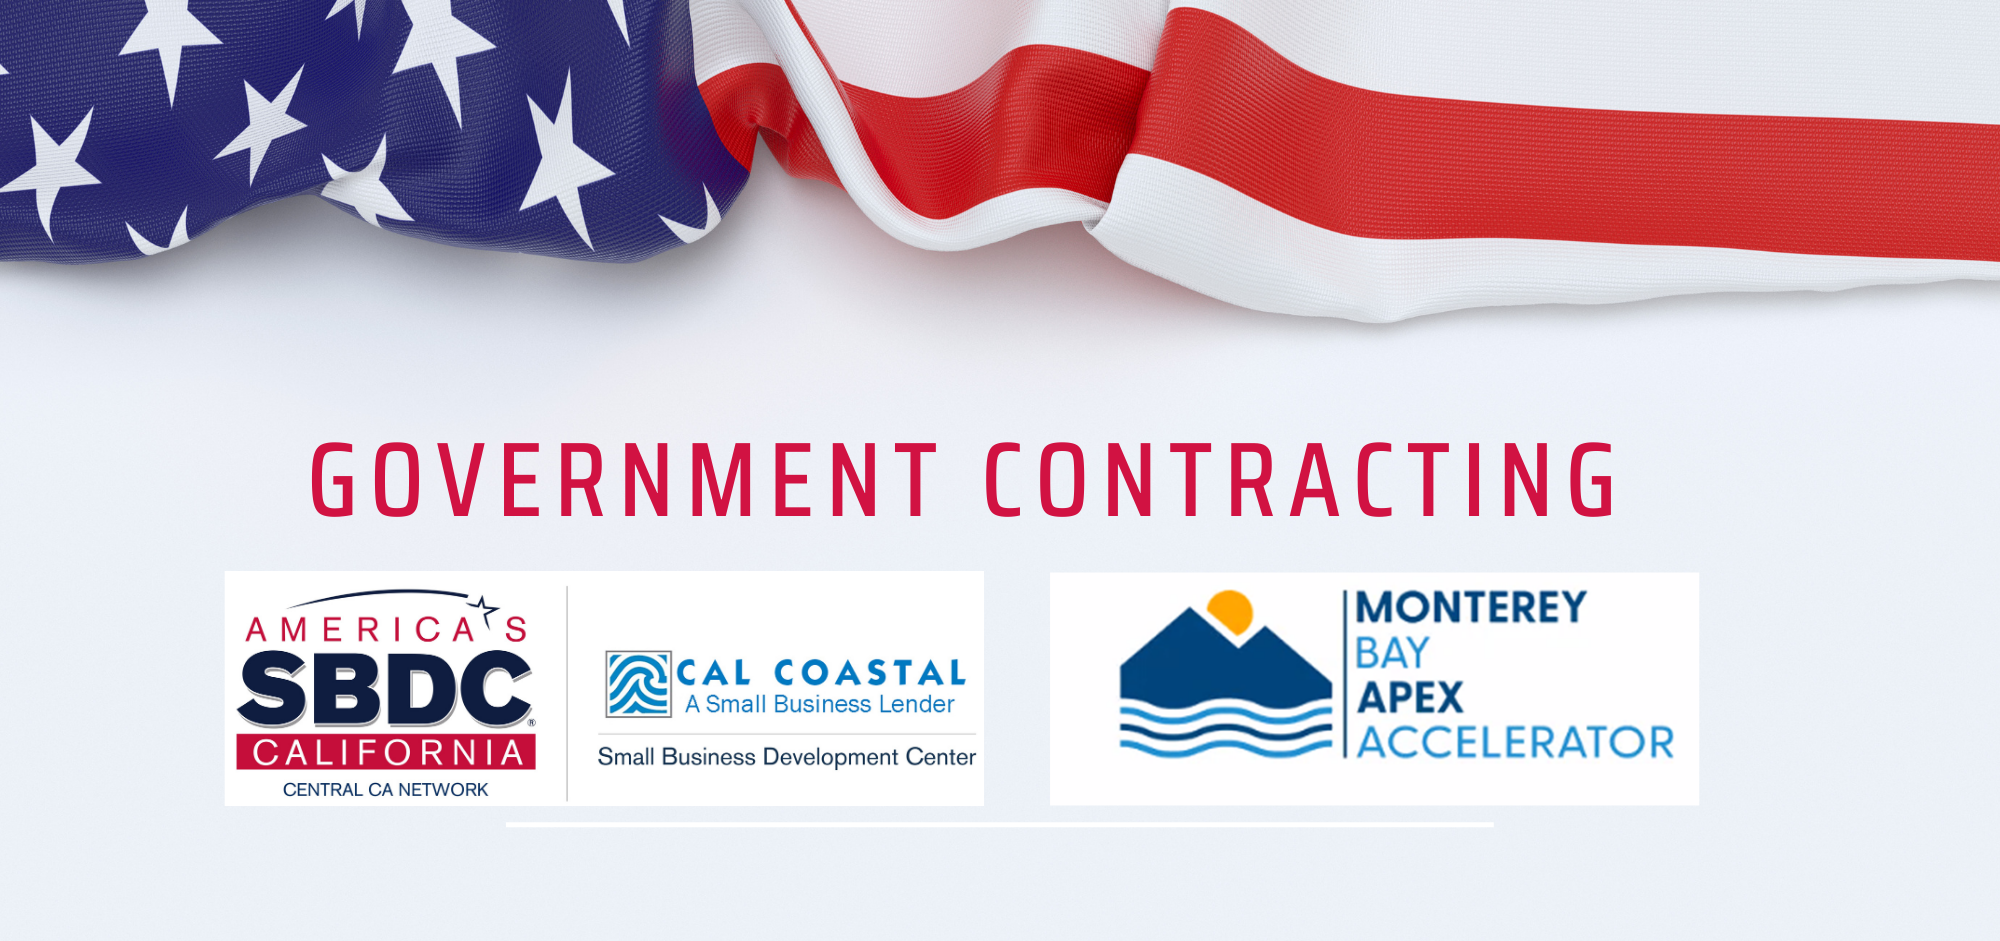 Cal Coastal SBDC and Monterey Bay APEX Accelerator logos by American Flag